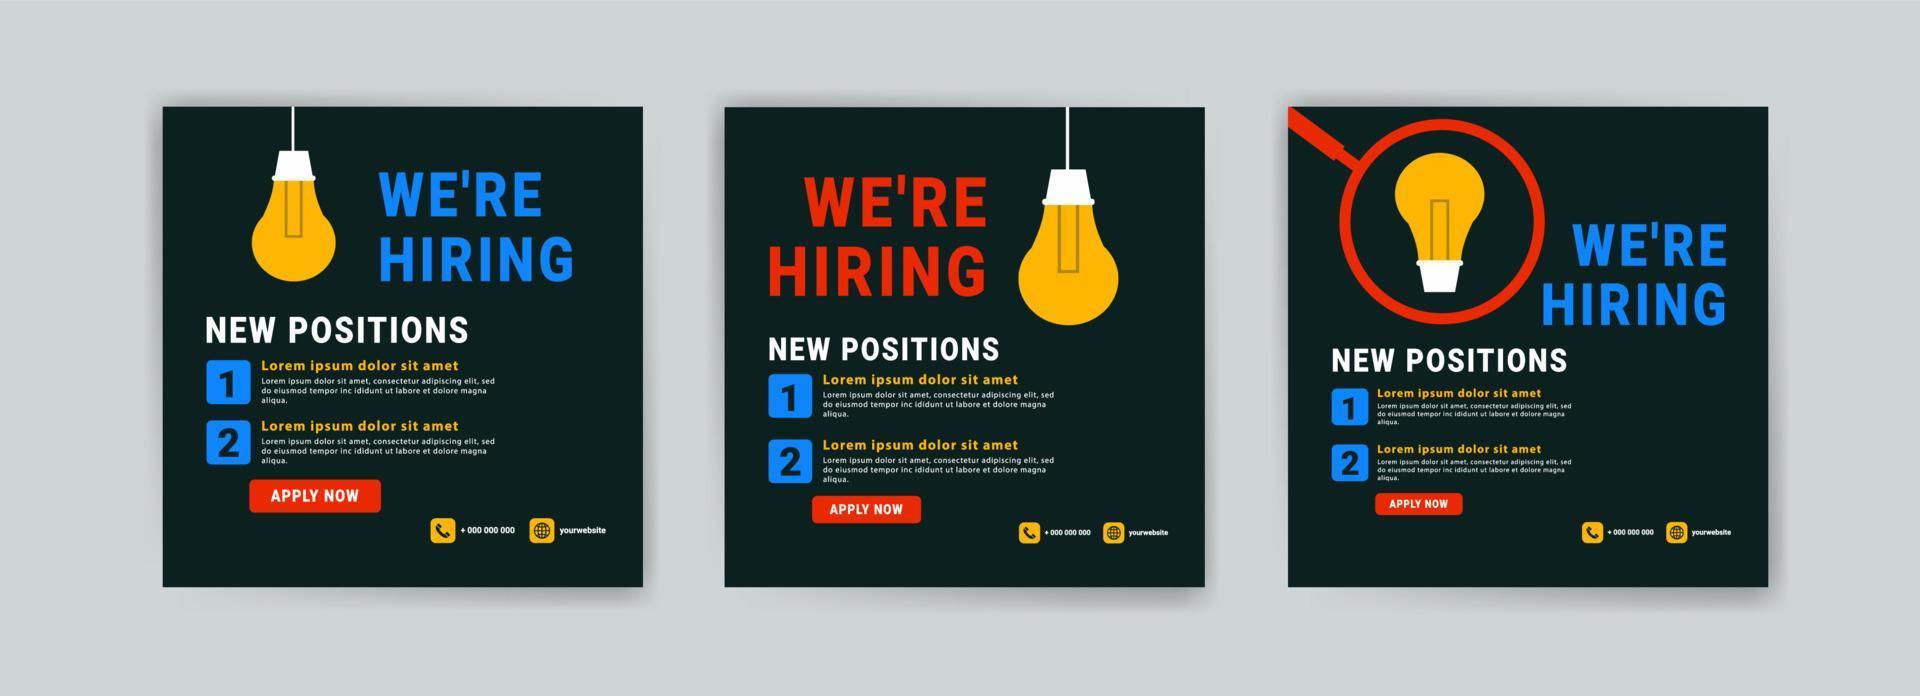 We're hiring. Job offer leaflet template. Job vacancy flyer poster template design. vector